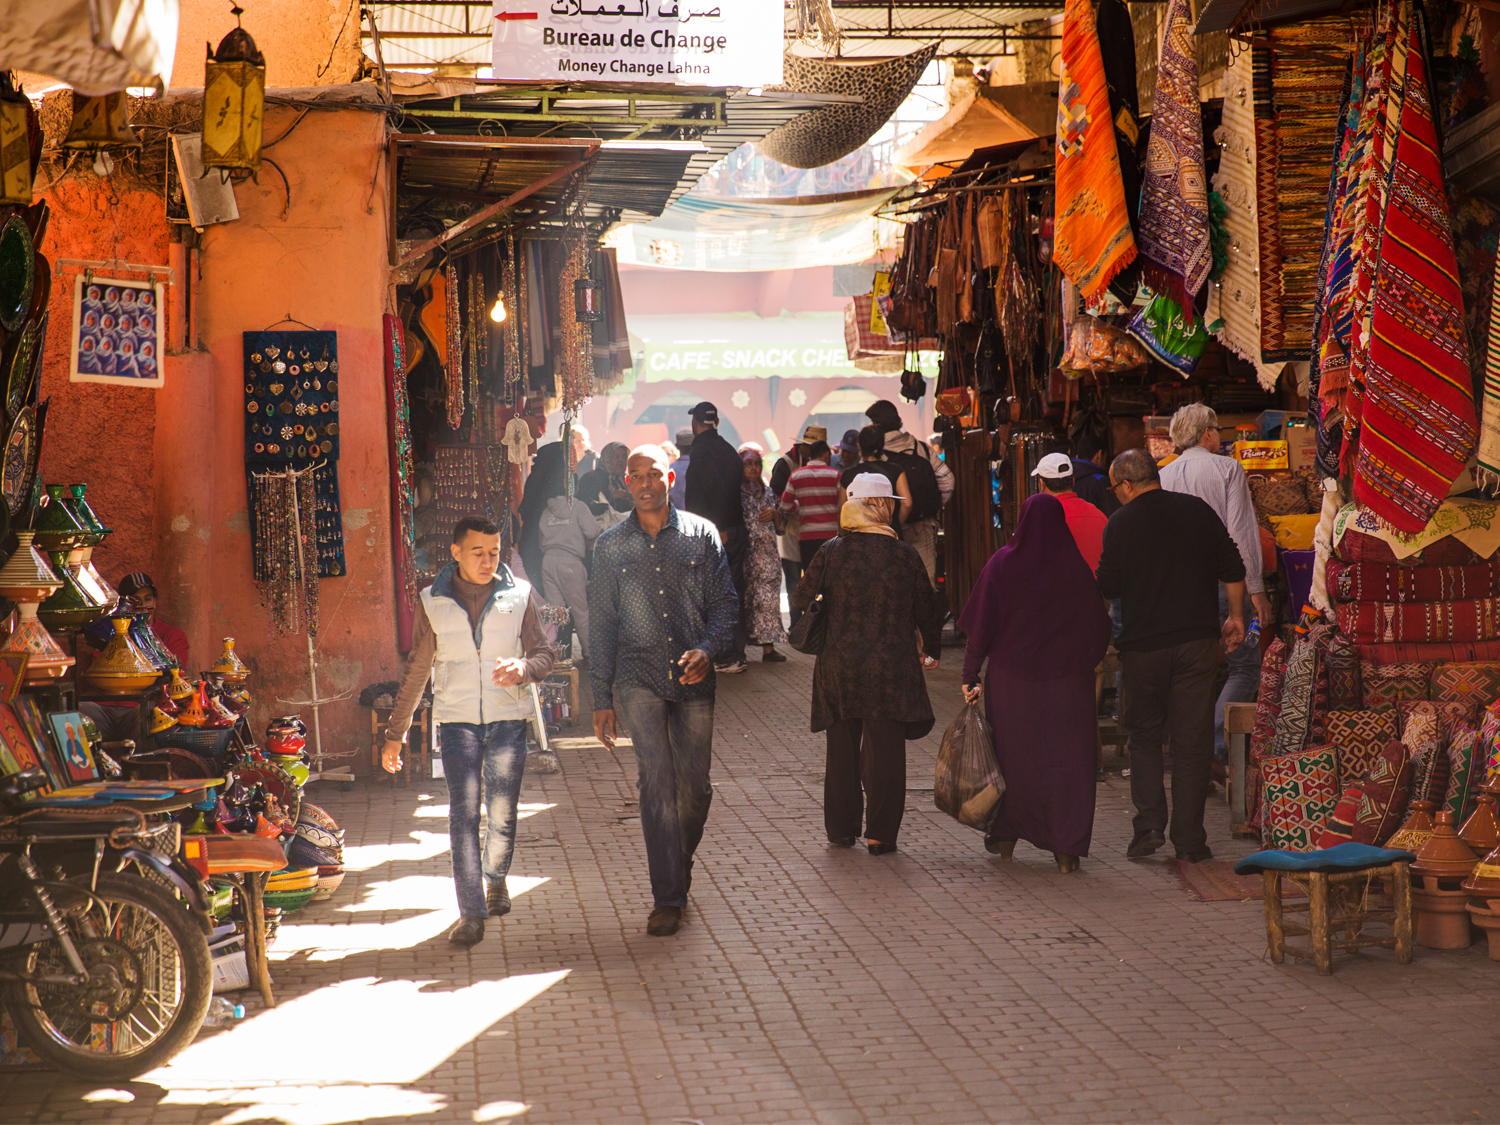 A souk in the Medina in Marrakech